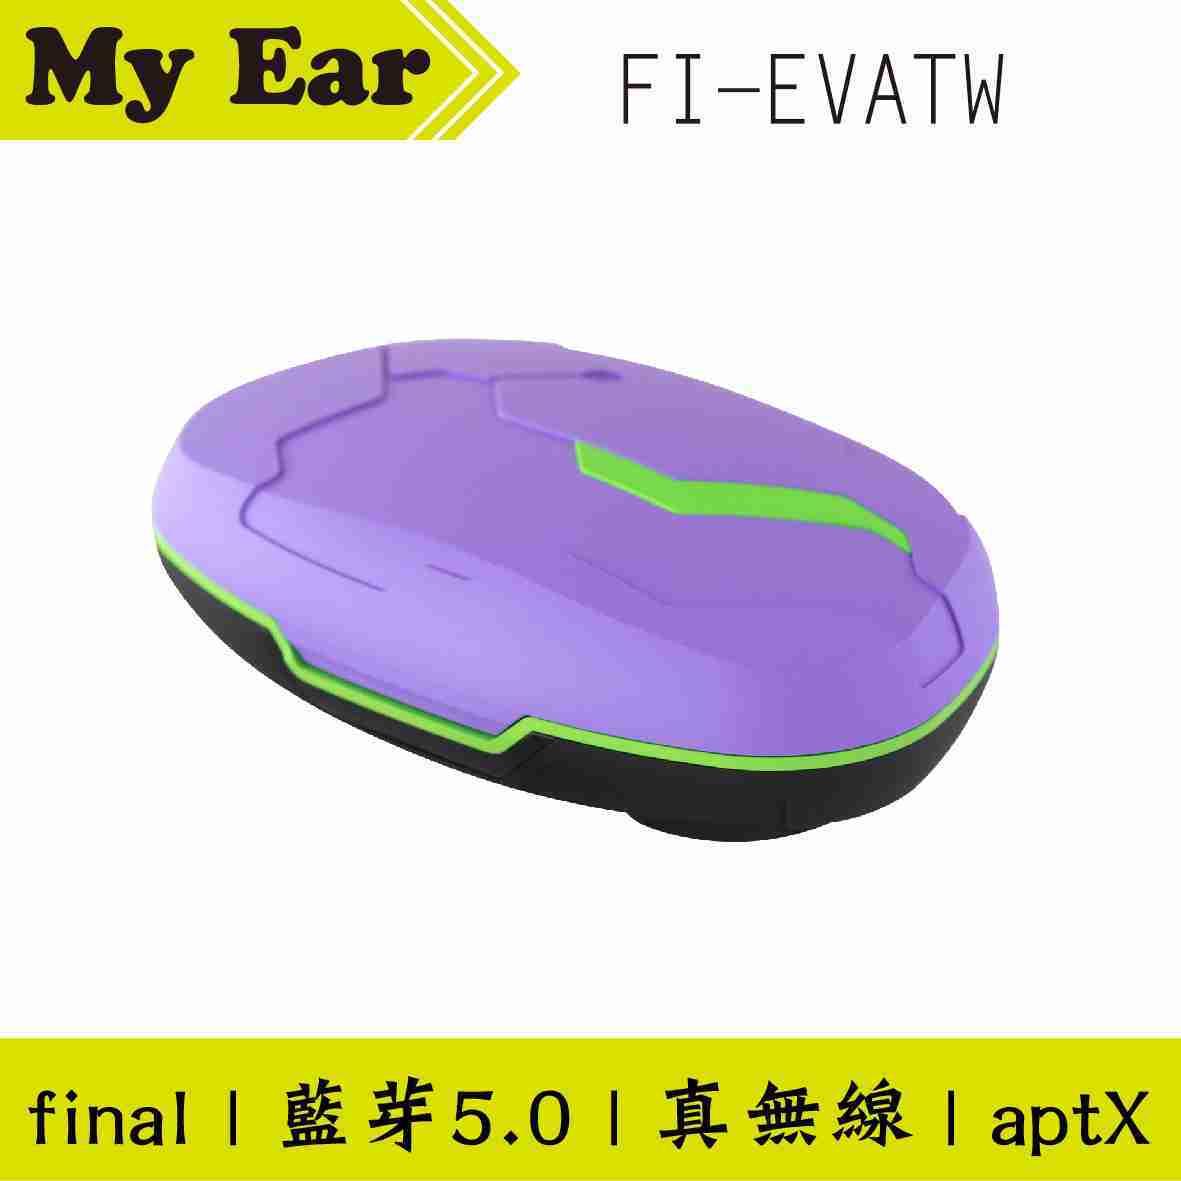 Final FI-EVATW 新世紀 福音戰士 藍芽 真無線 耳機 | My Ear 耳機專門店